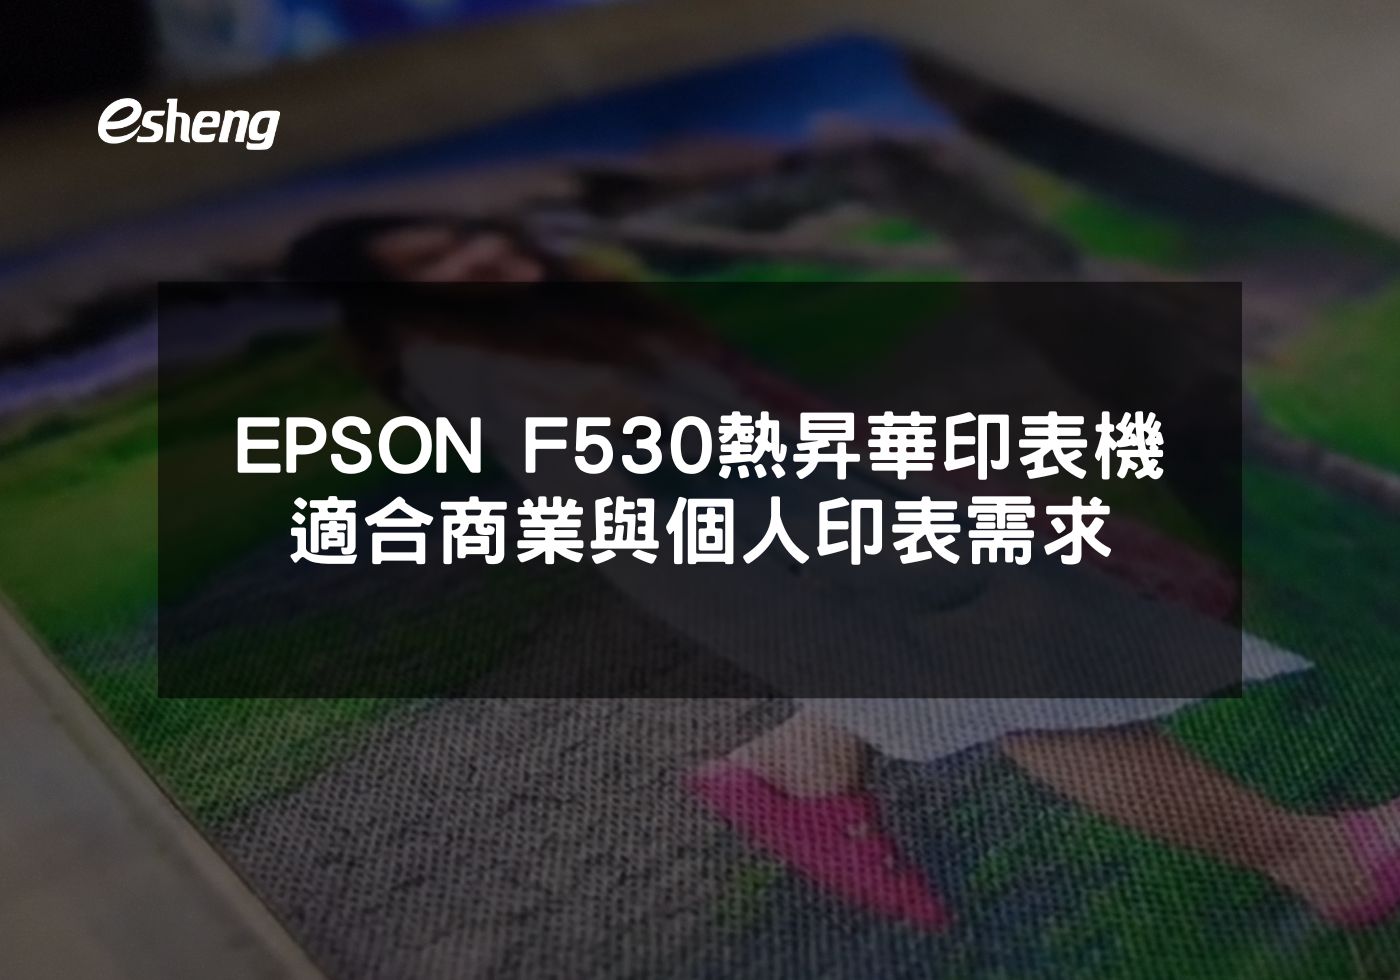 EPSON F530高效印表機適合各種用戶